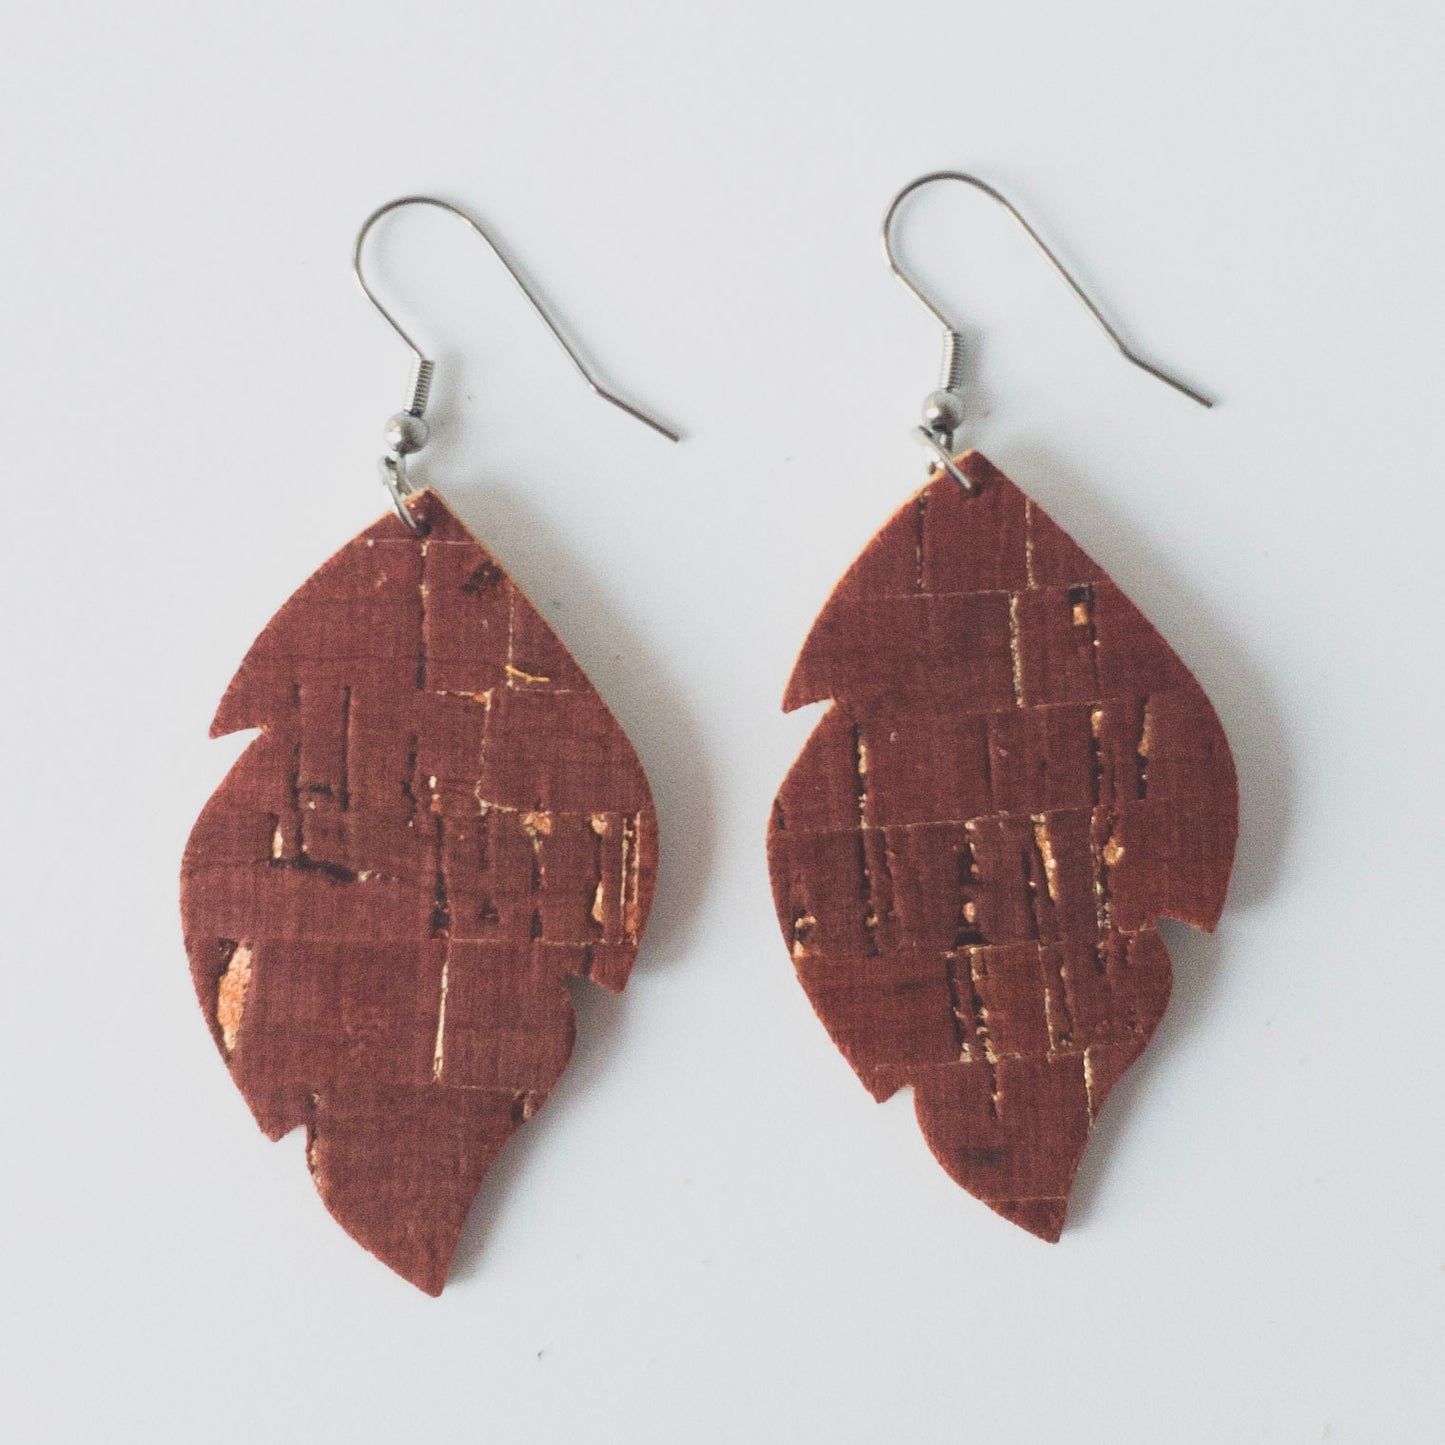 Leather Leaf Earrings